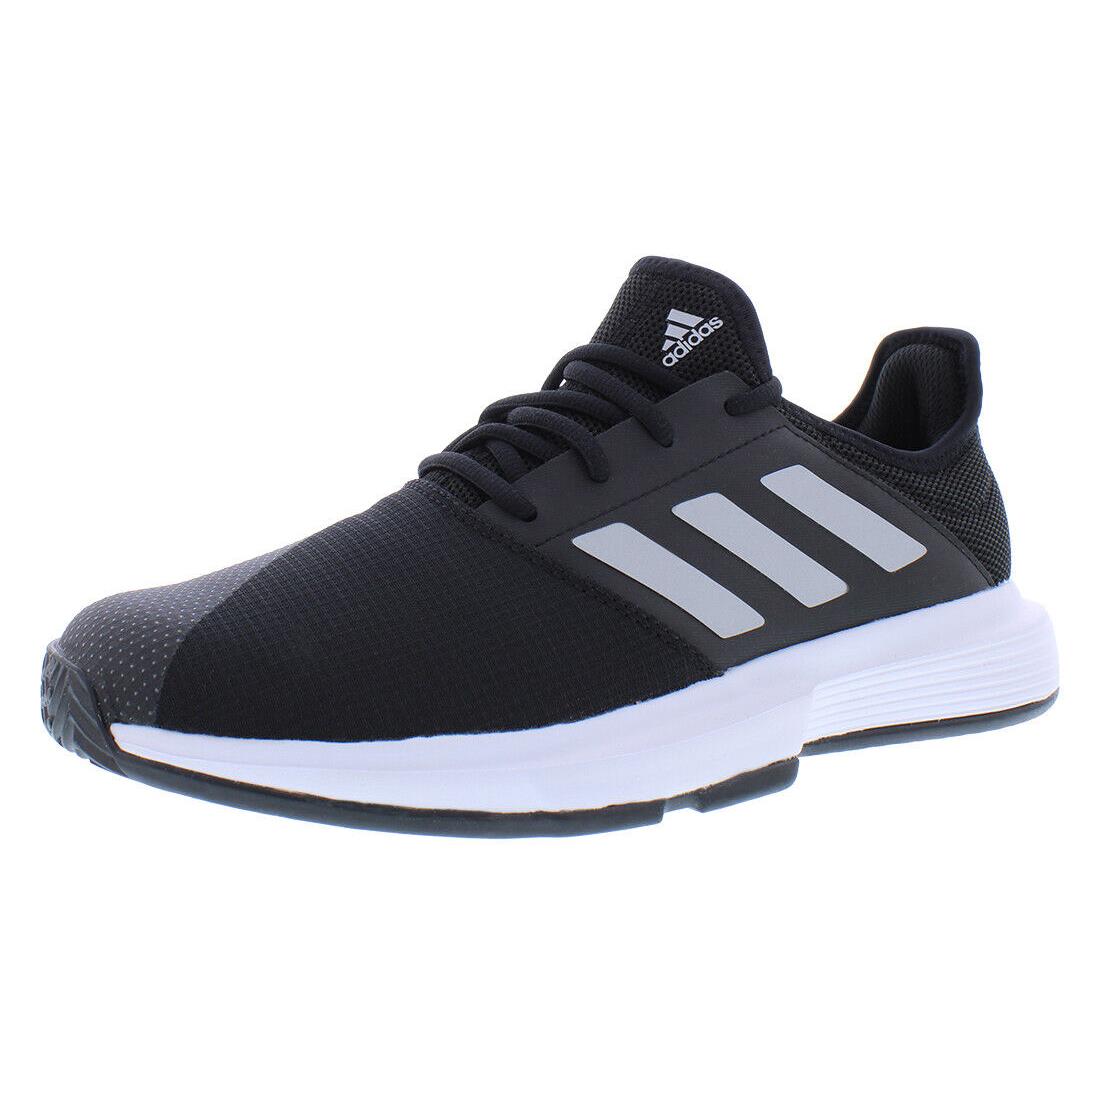 Adidas Gamecourt Mens Shoes - Core Black/Metallic Silver/Cloud White, Main: Black